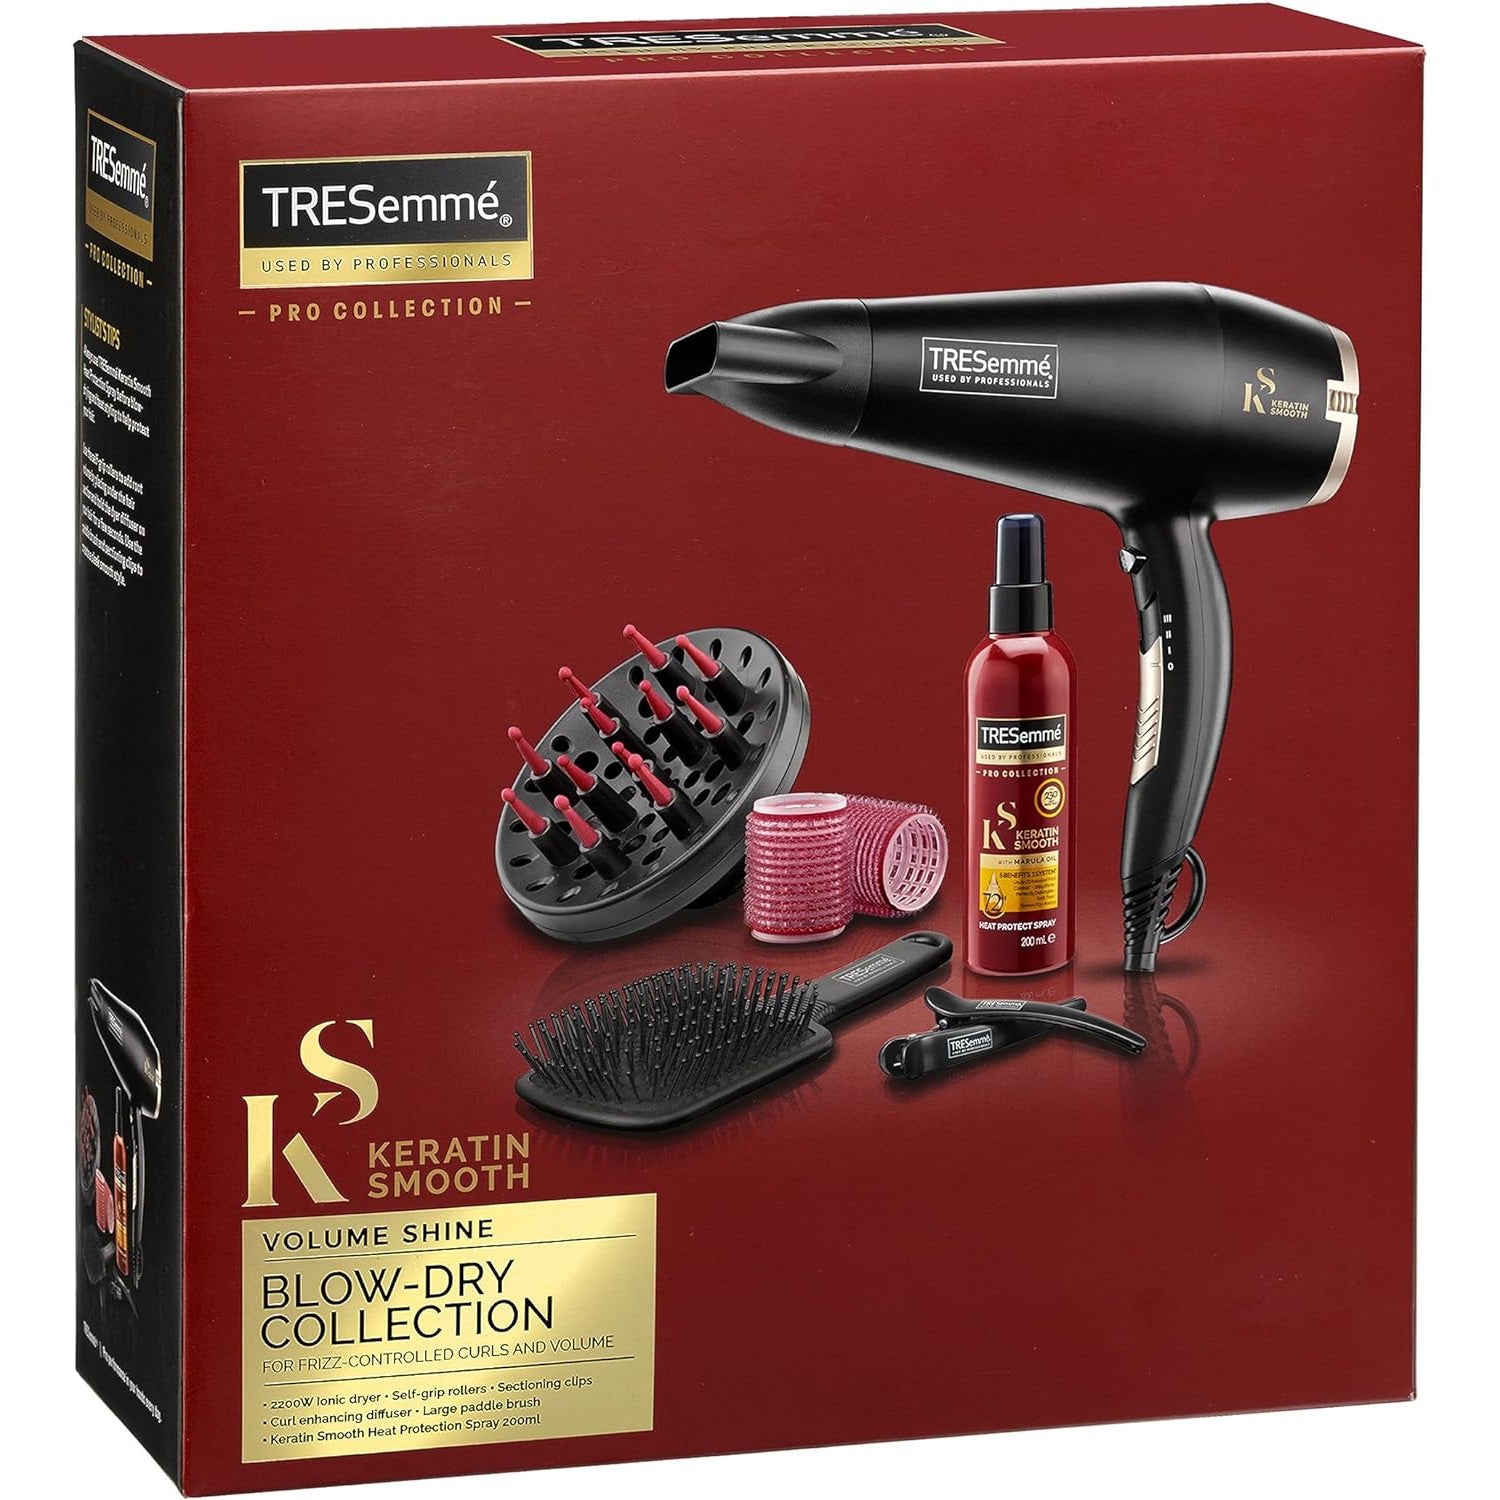 TRESemme Keratin Smooth 2200W Volume Shine Hair Dryer Gift Set